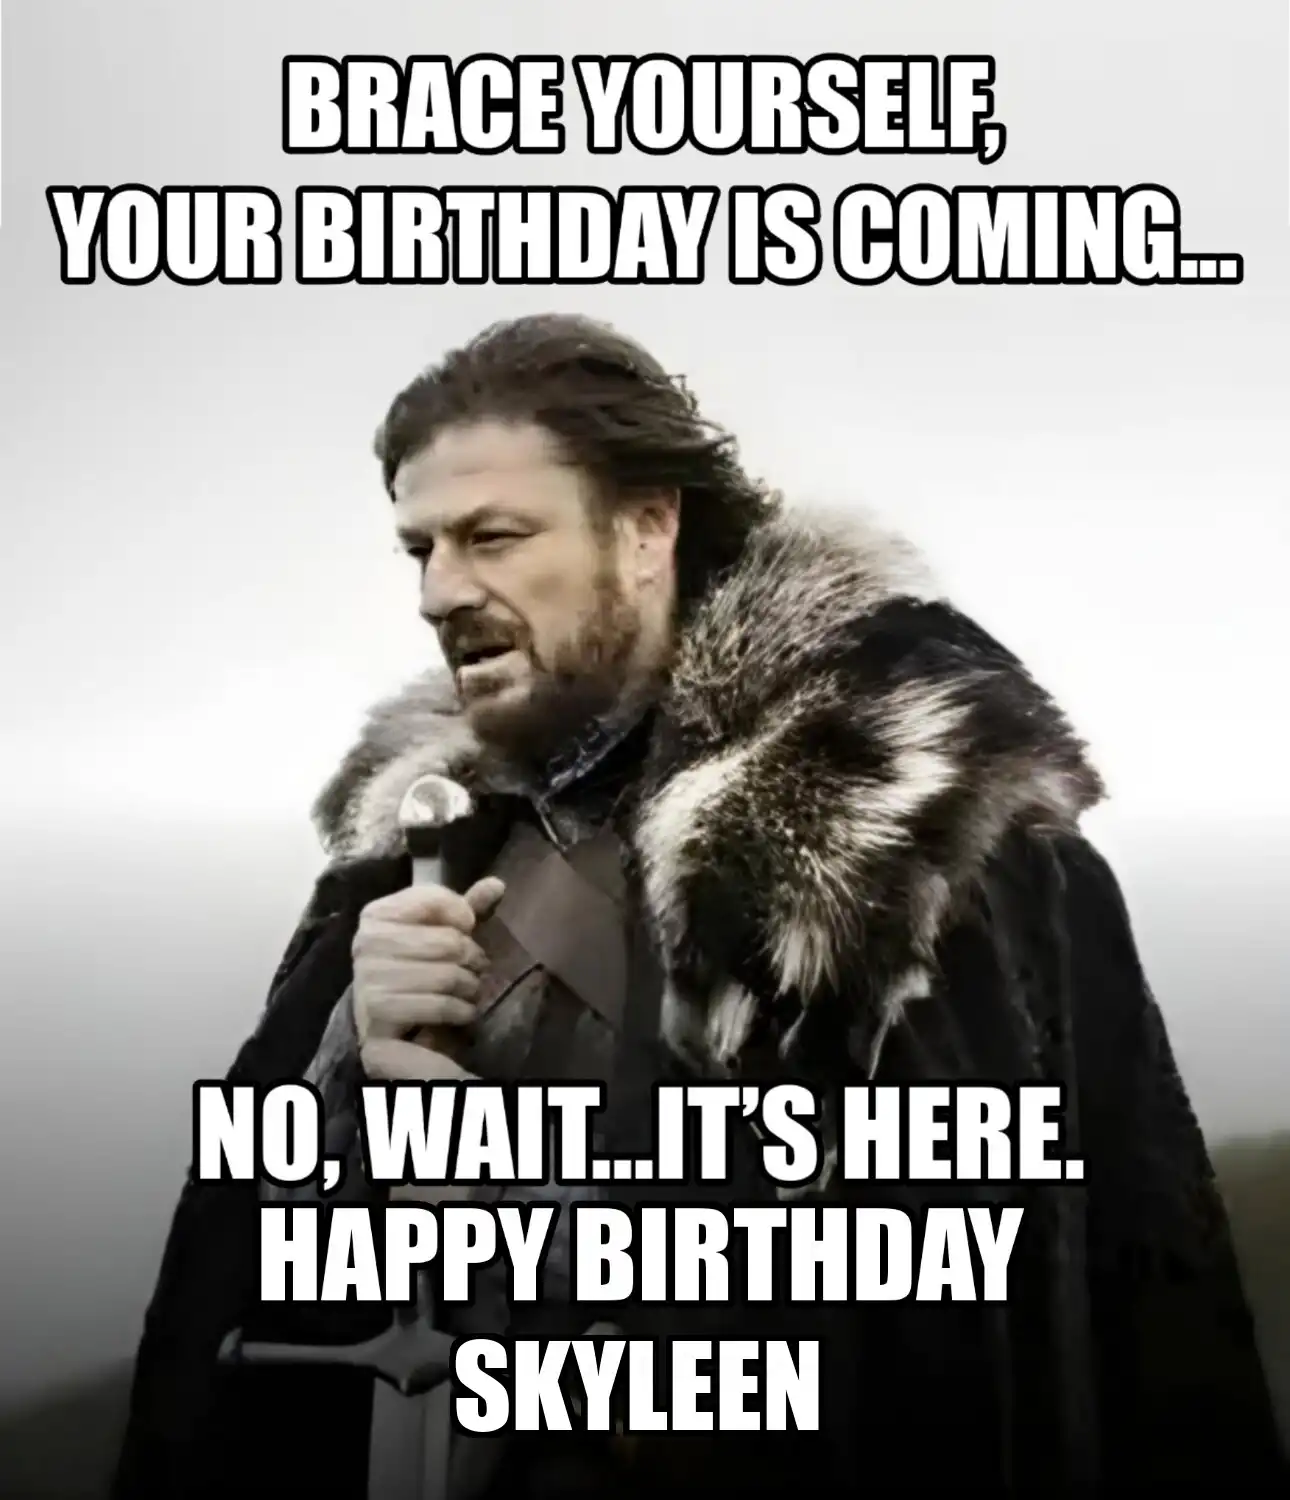 Happy Birthday Skyleen Brace Yourself Your Birthday Is Coming Meme